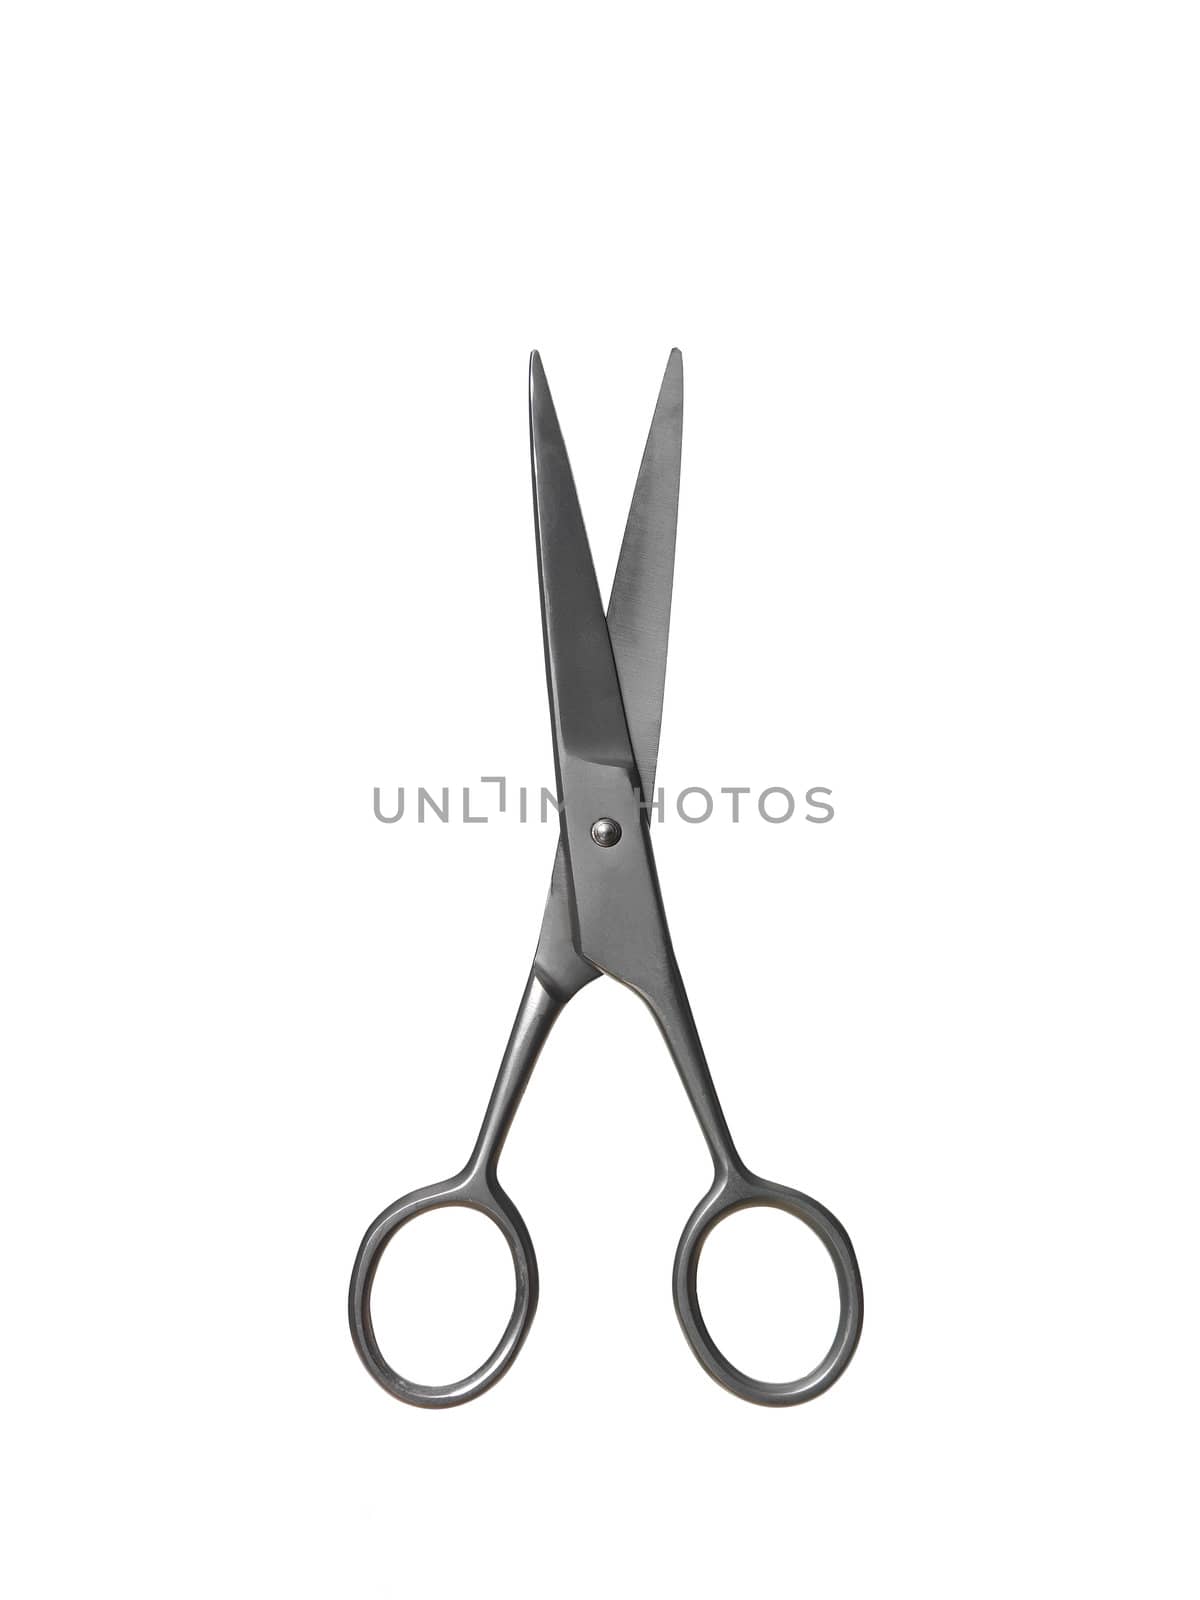 scissors by gemenacom